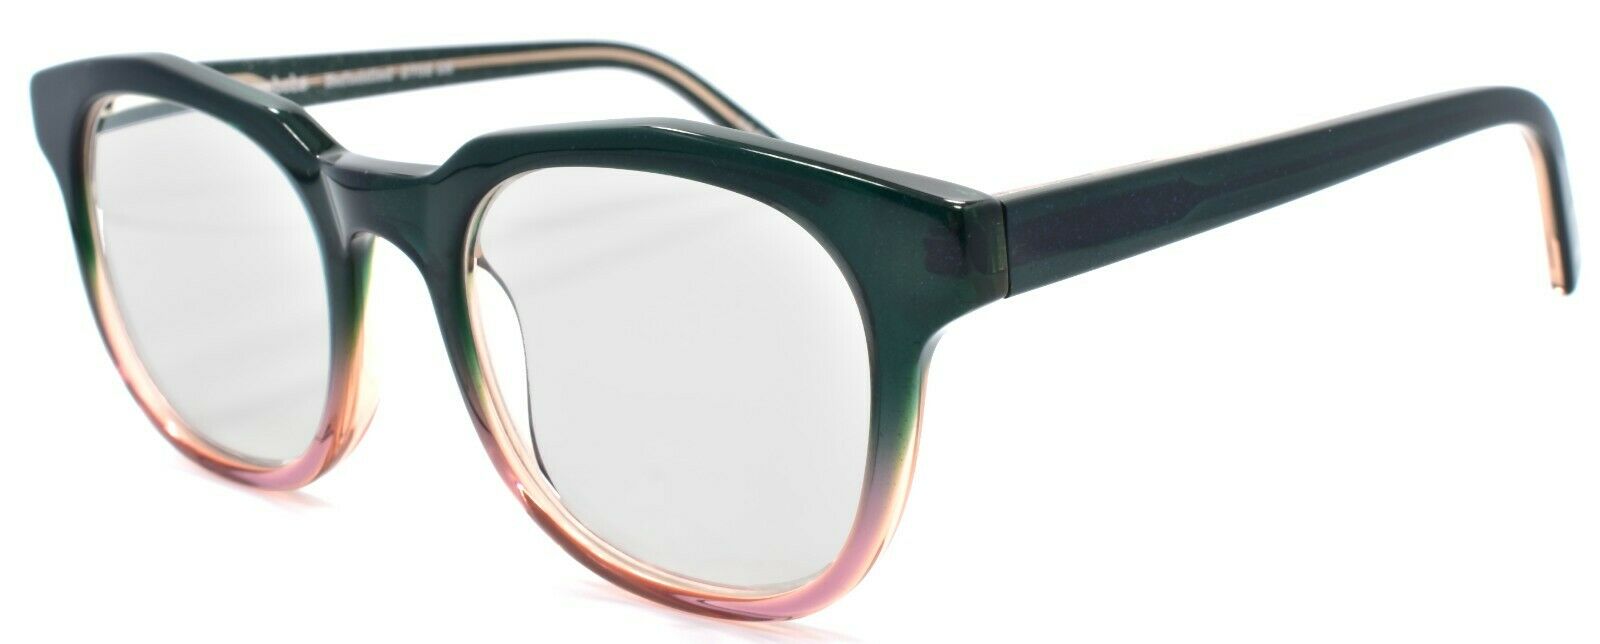 1-Eyebobs Befuddled 2702 26 Women's Reading Glasses Green / Purple +1.00-842754140928-IKSpecs